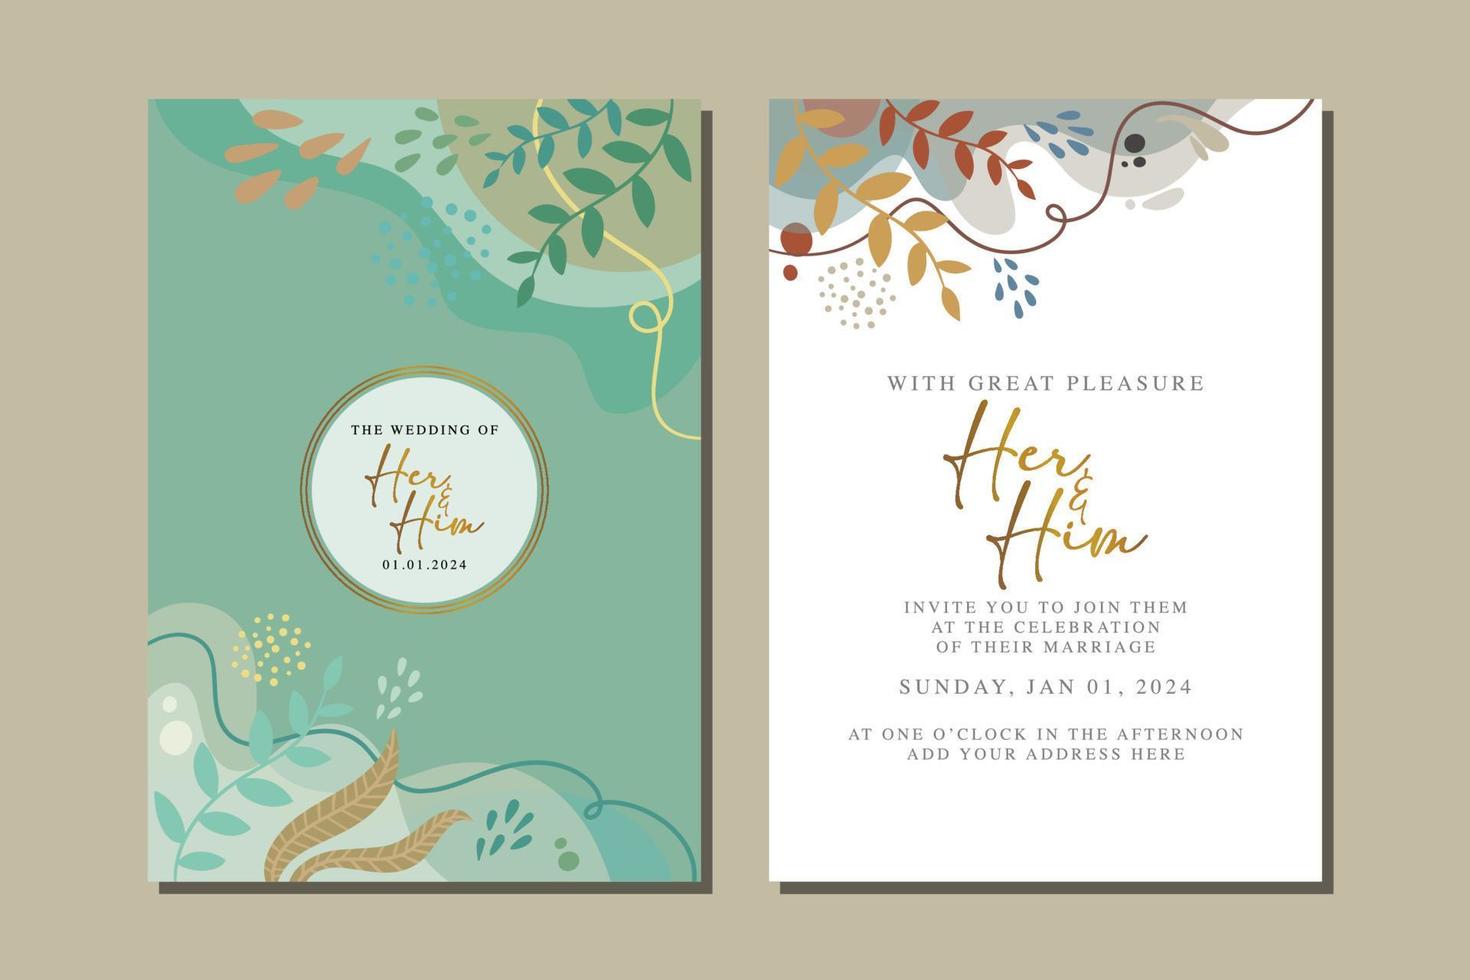 beautiful flowers wedding invitation card vector